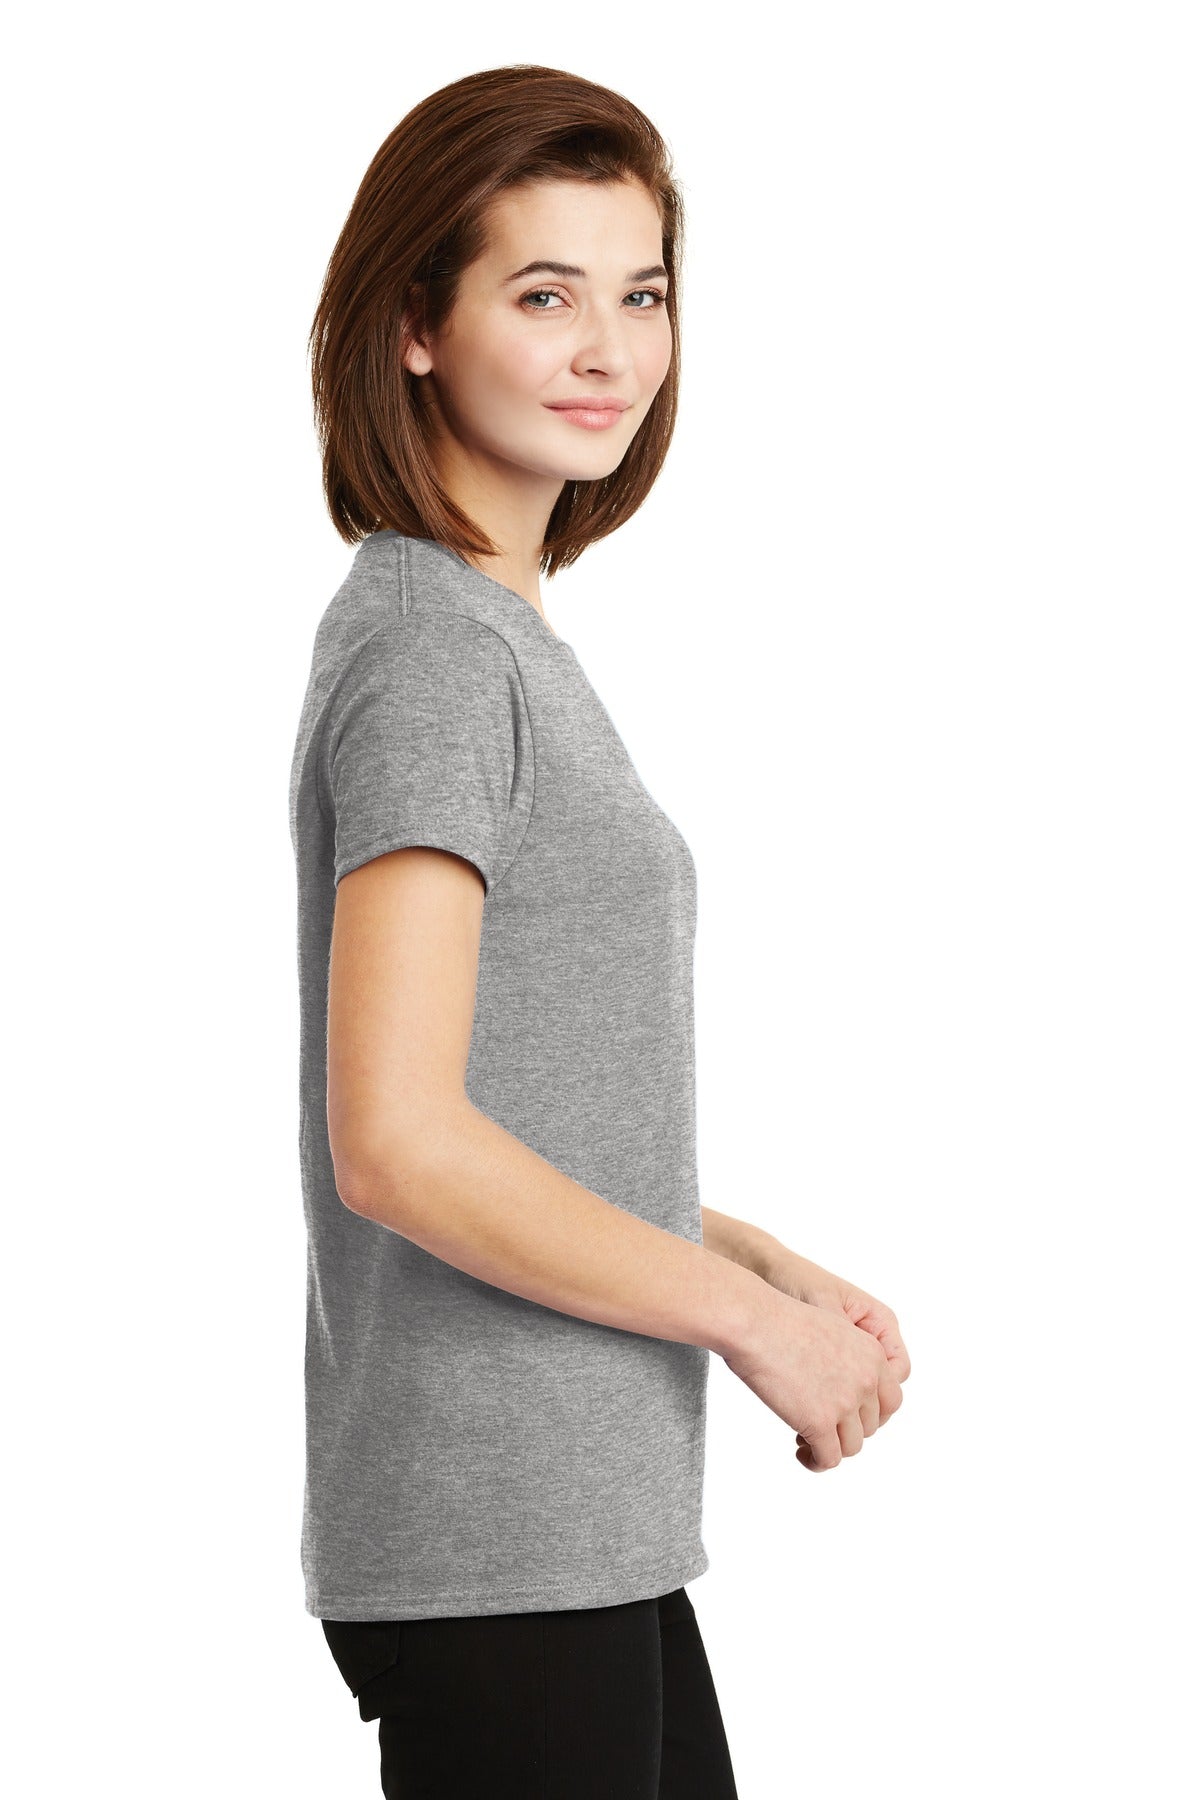 Gildan® - Ladies Ultra Cotton® 100% US Cotton T-Shirt. 2000L [Sport Grey] - DFW Impression